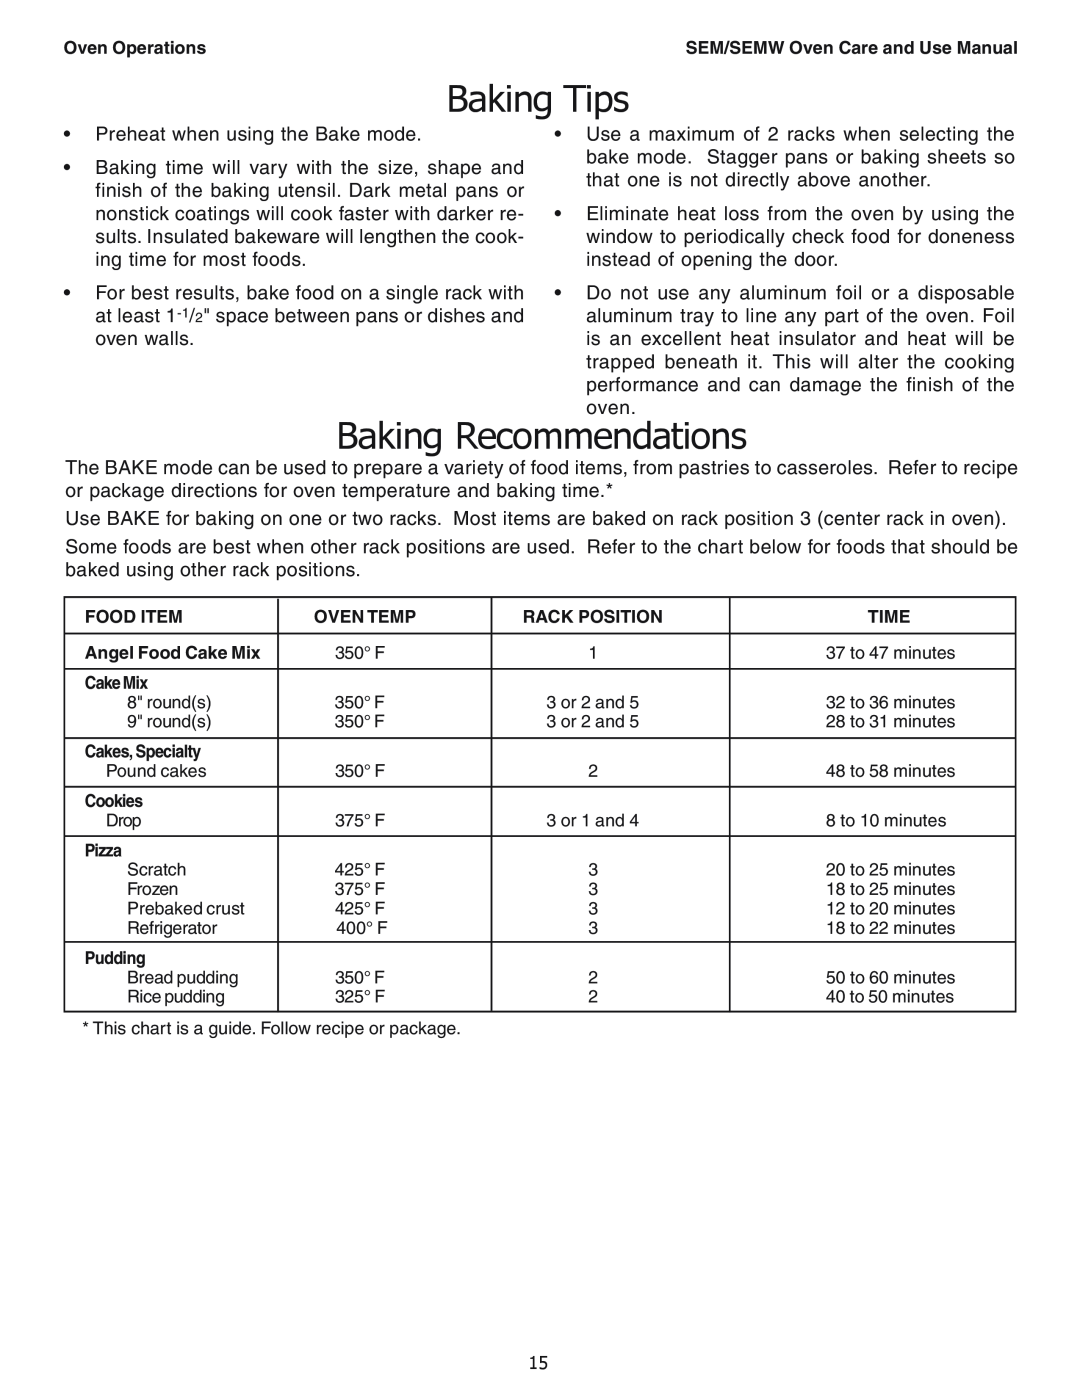 Thermador SEMW272, SEMW302, SEM272, SEM302 manual Baking Tips, Baking Recommendations 